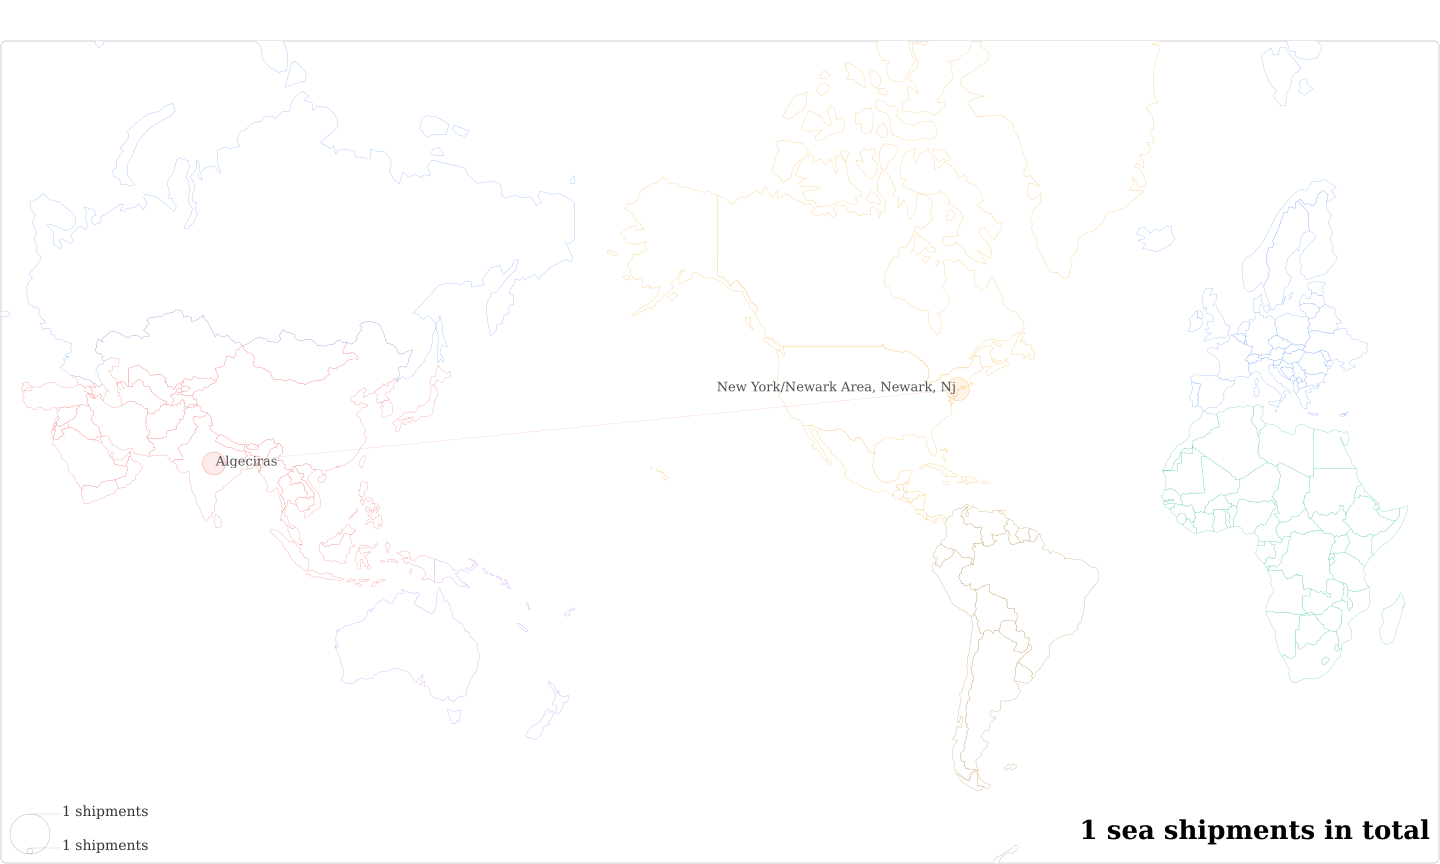 Importadora Globastic S A's Imports Per Country Map